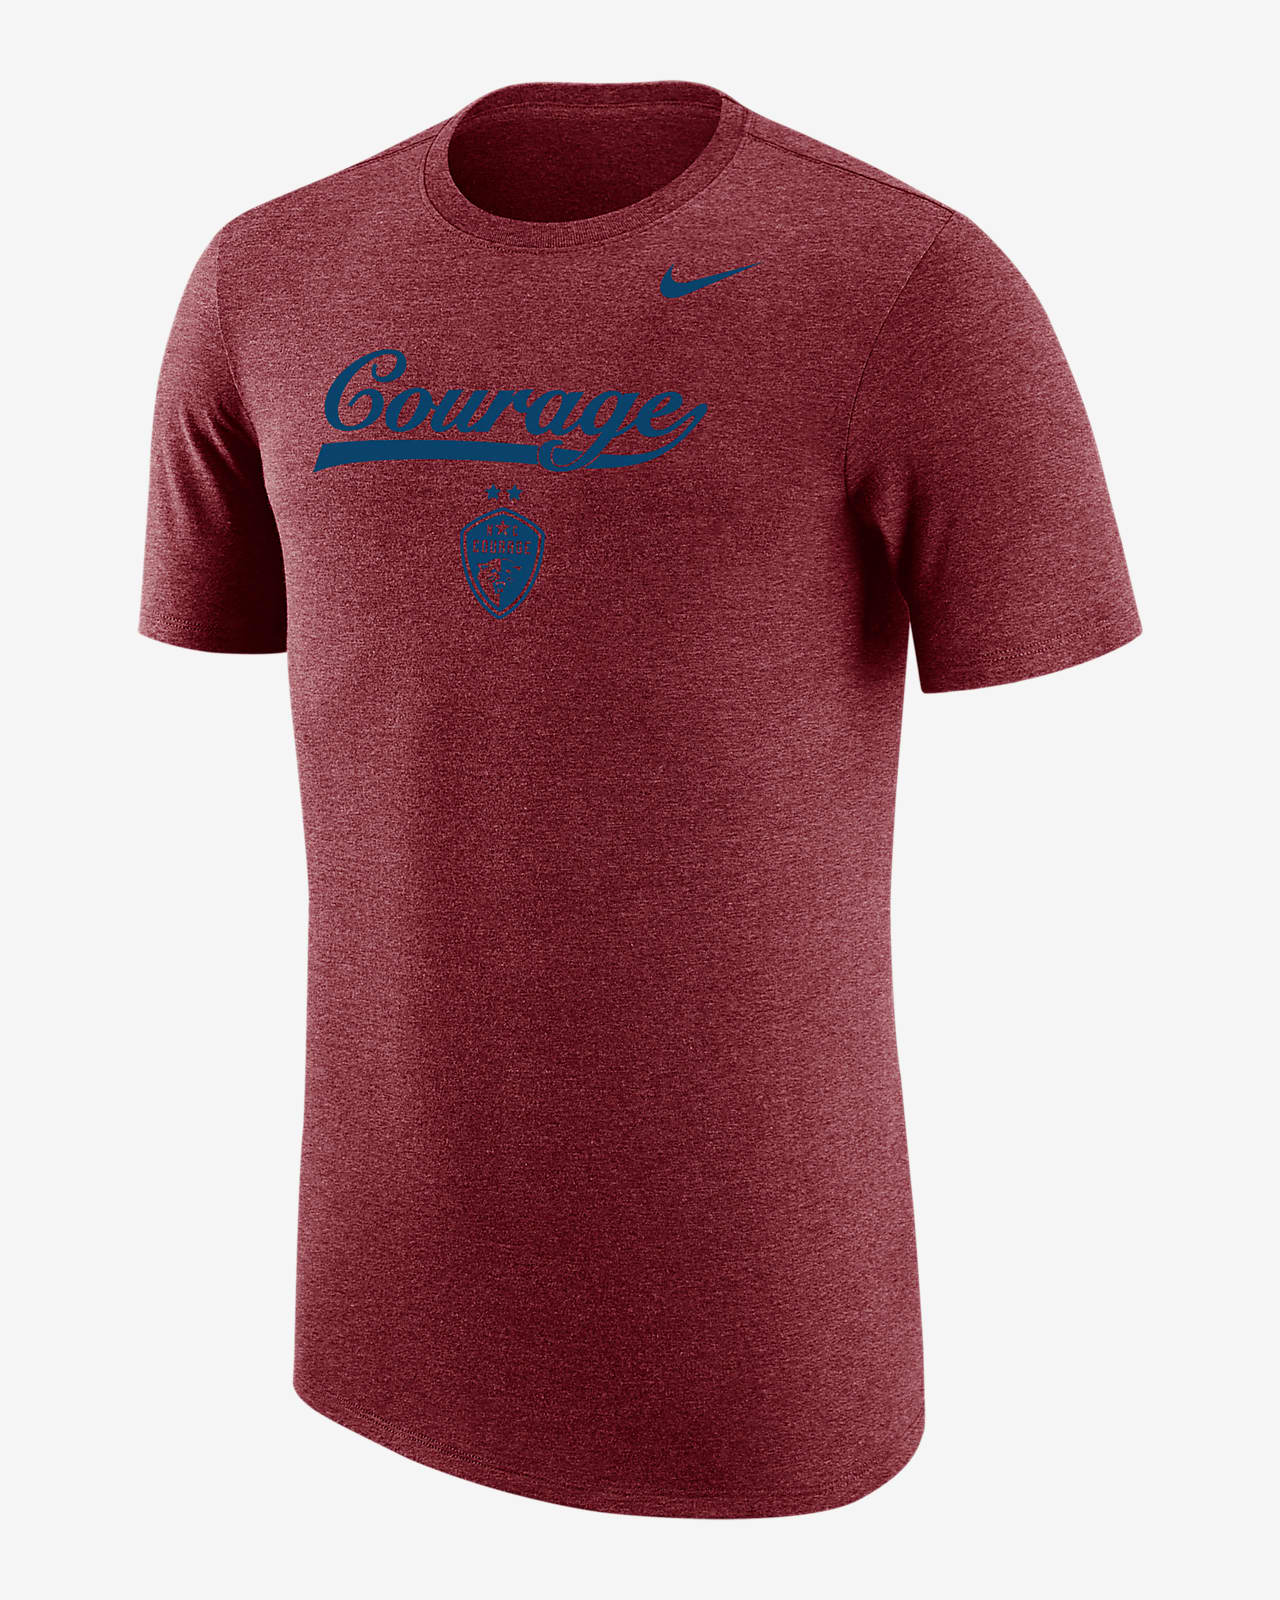 North Carolina Courage Men's Nike Soccer T-Shirt